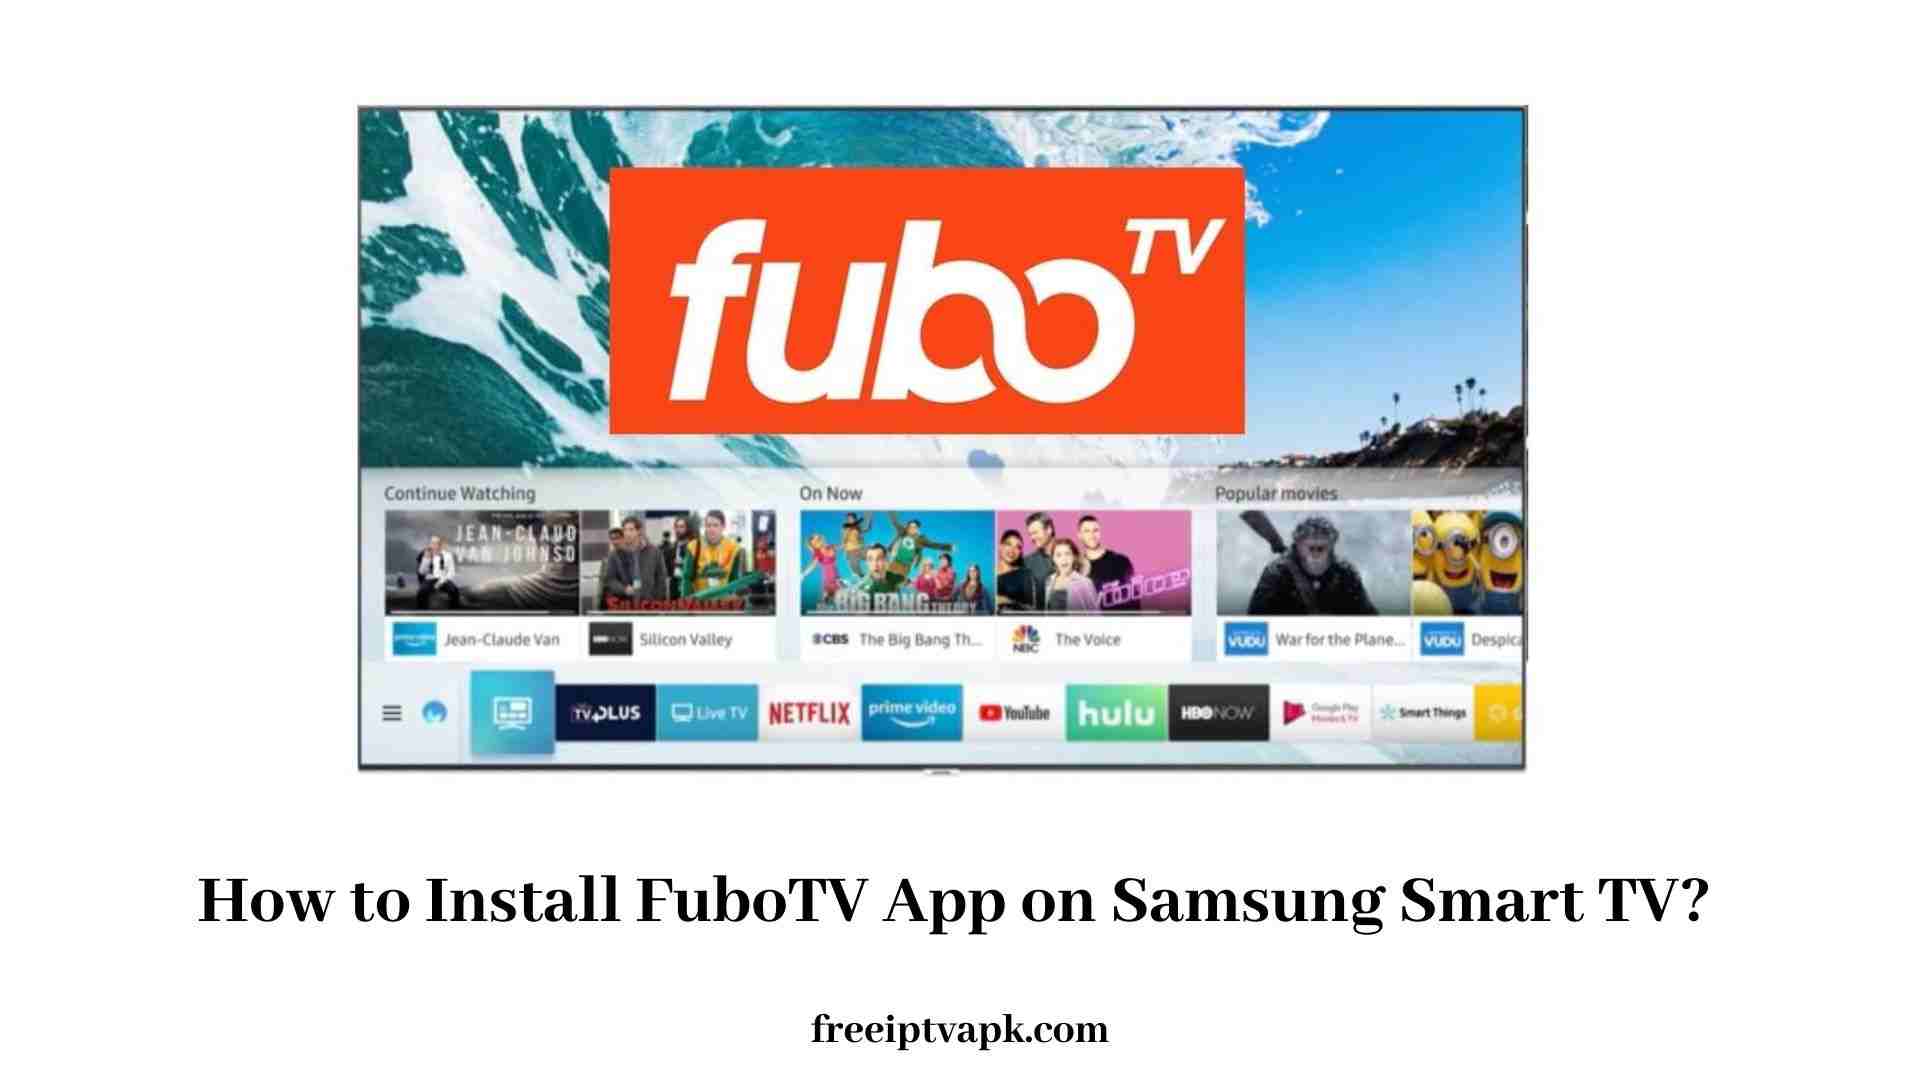 FuboTV App on Samsung Smart TV